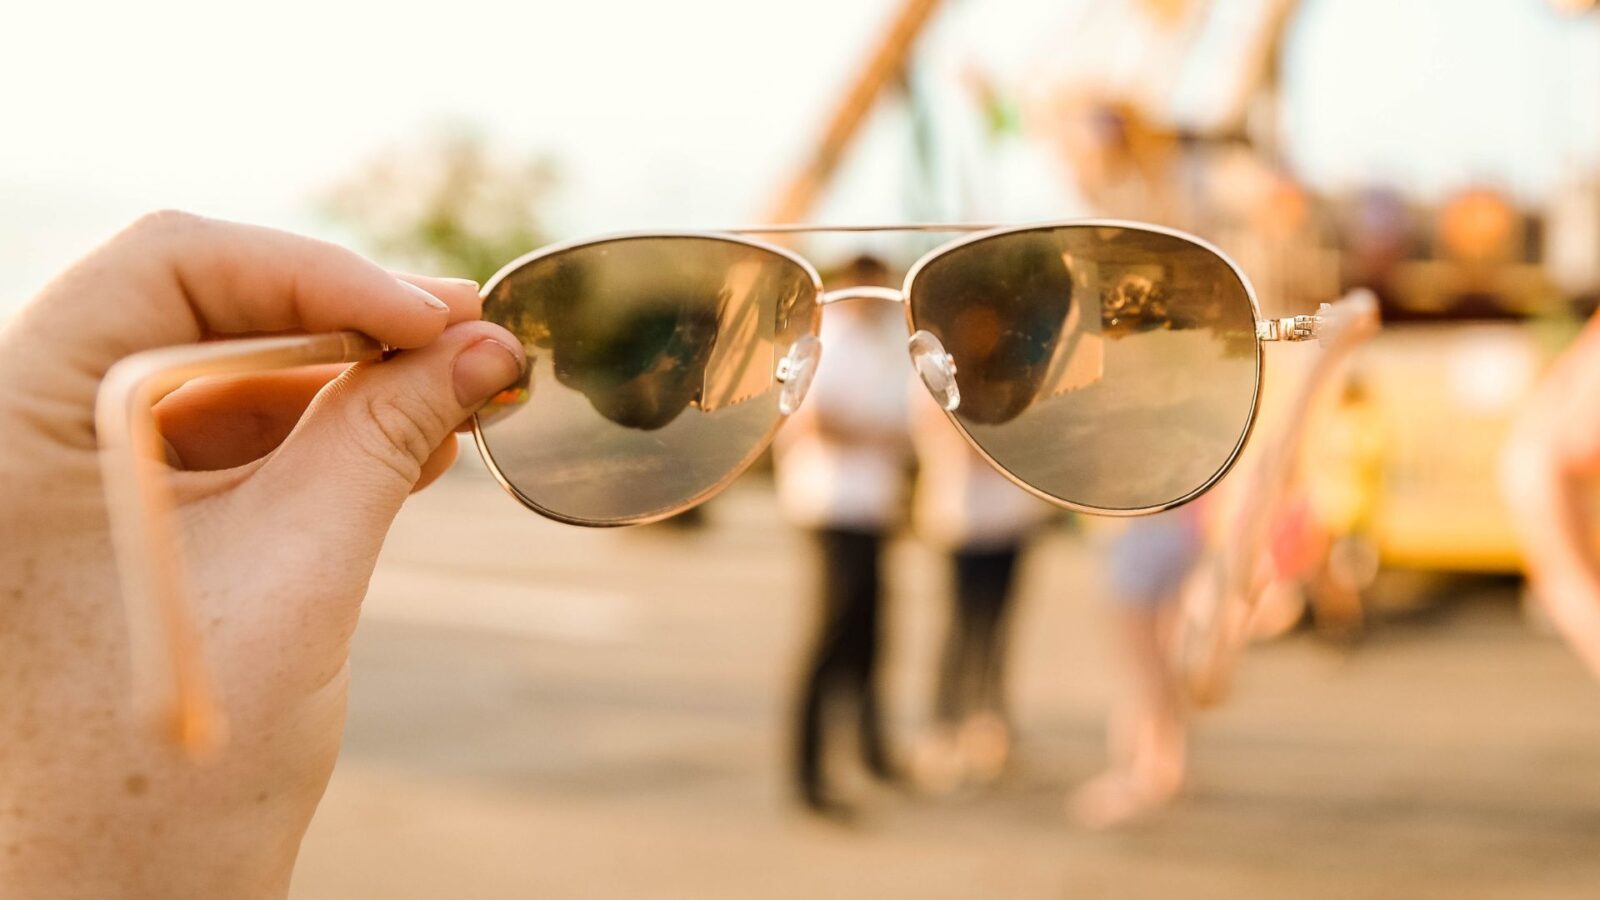 6 Most Dazzling Sunglasses Designs To Try This Summer #beverlyhills #beverlyhillsmagazine #sunglasses #dazzlingsunglasses #typesofsunglasses #aviatorsunglasses #oversizedsunglasses #mirroredlenses #bevhillsmag #roundsunglasses